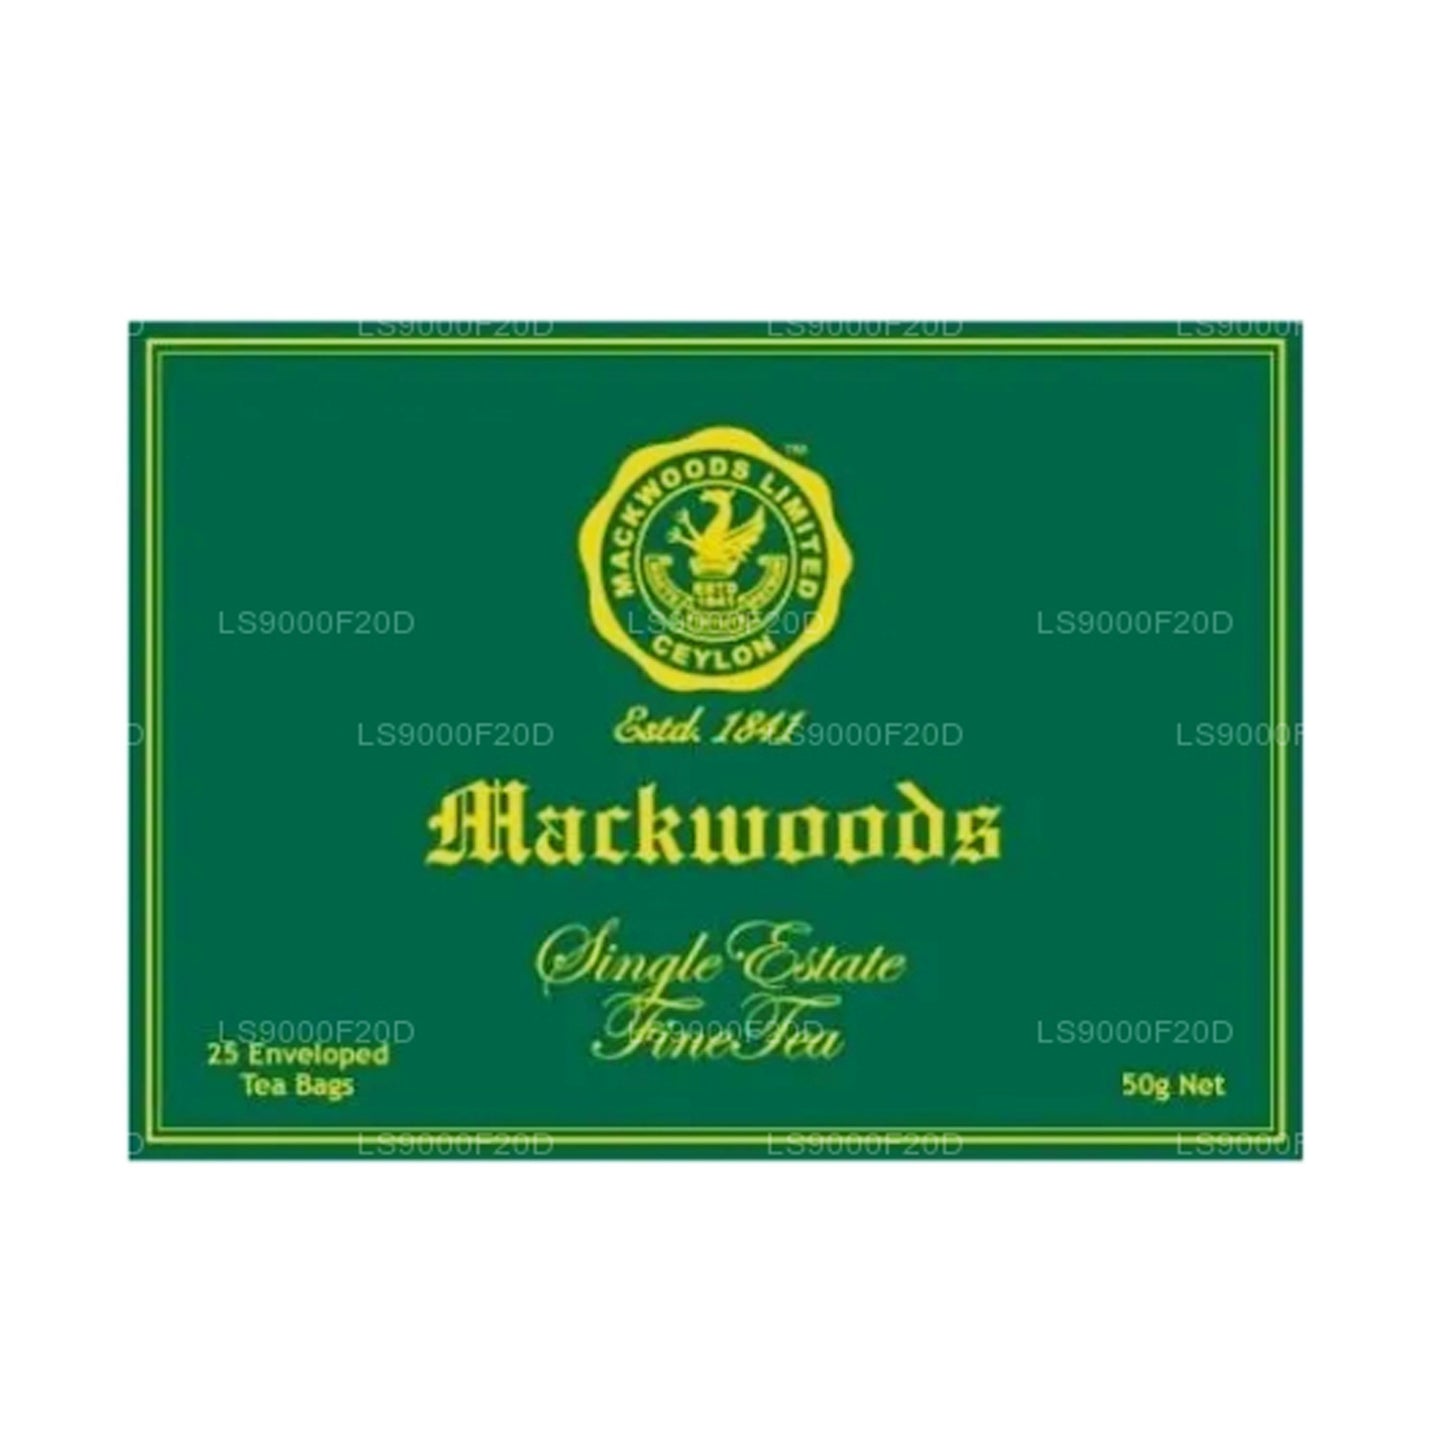 Mackwoods Classic, fin sort te, i 25 indhyllede teposer (50 g)